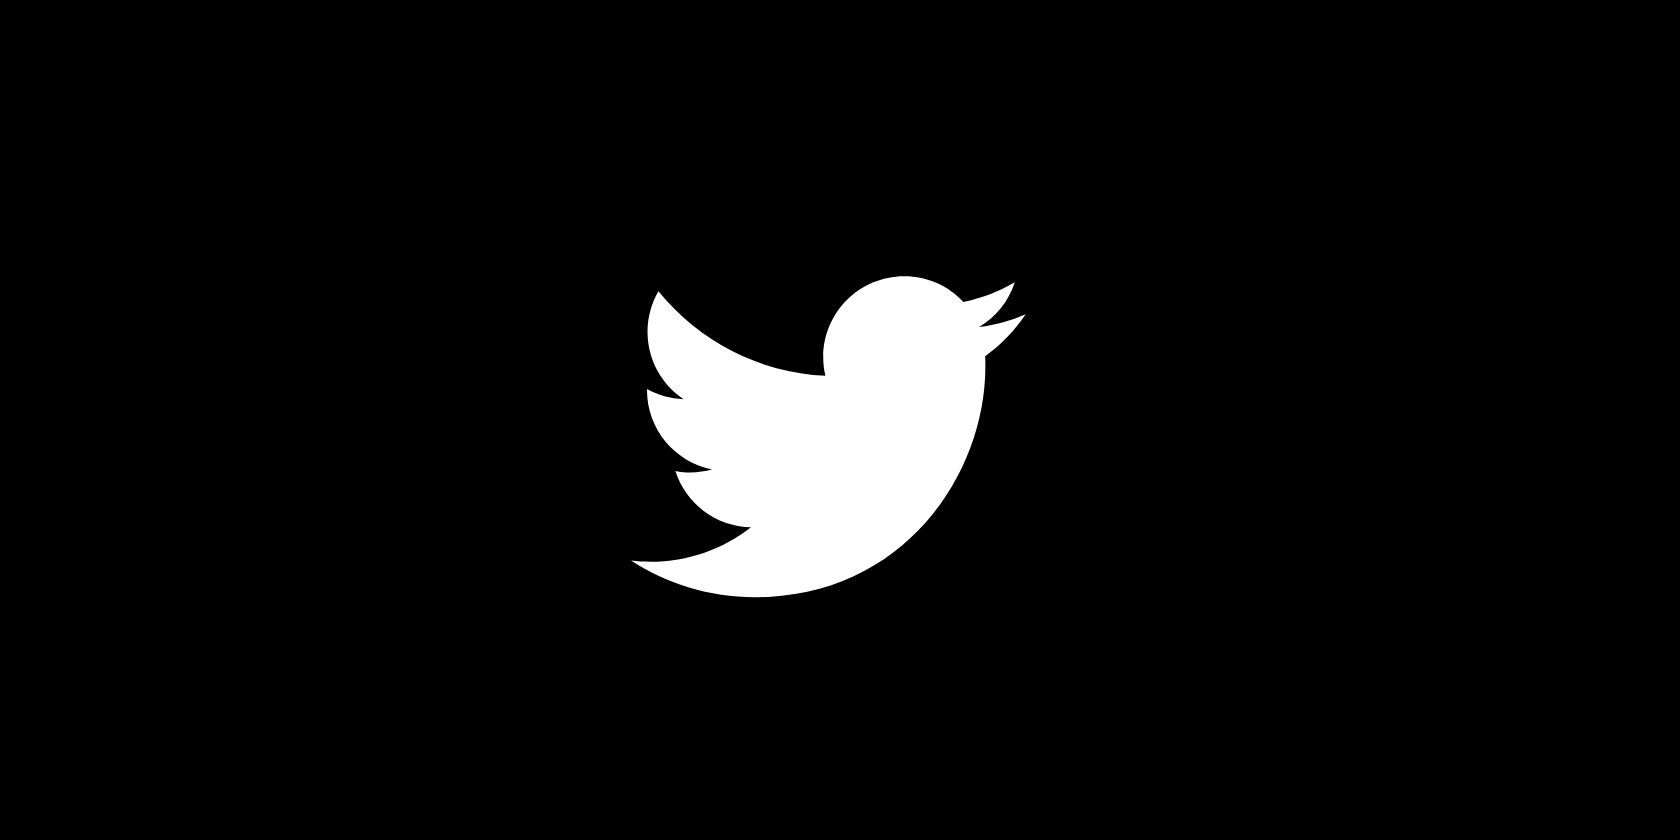 twitter logo black and white